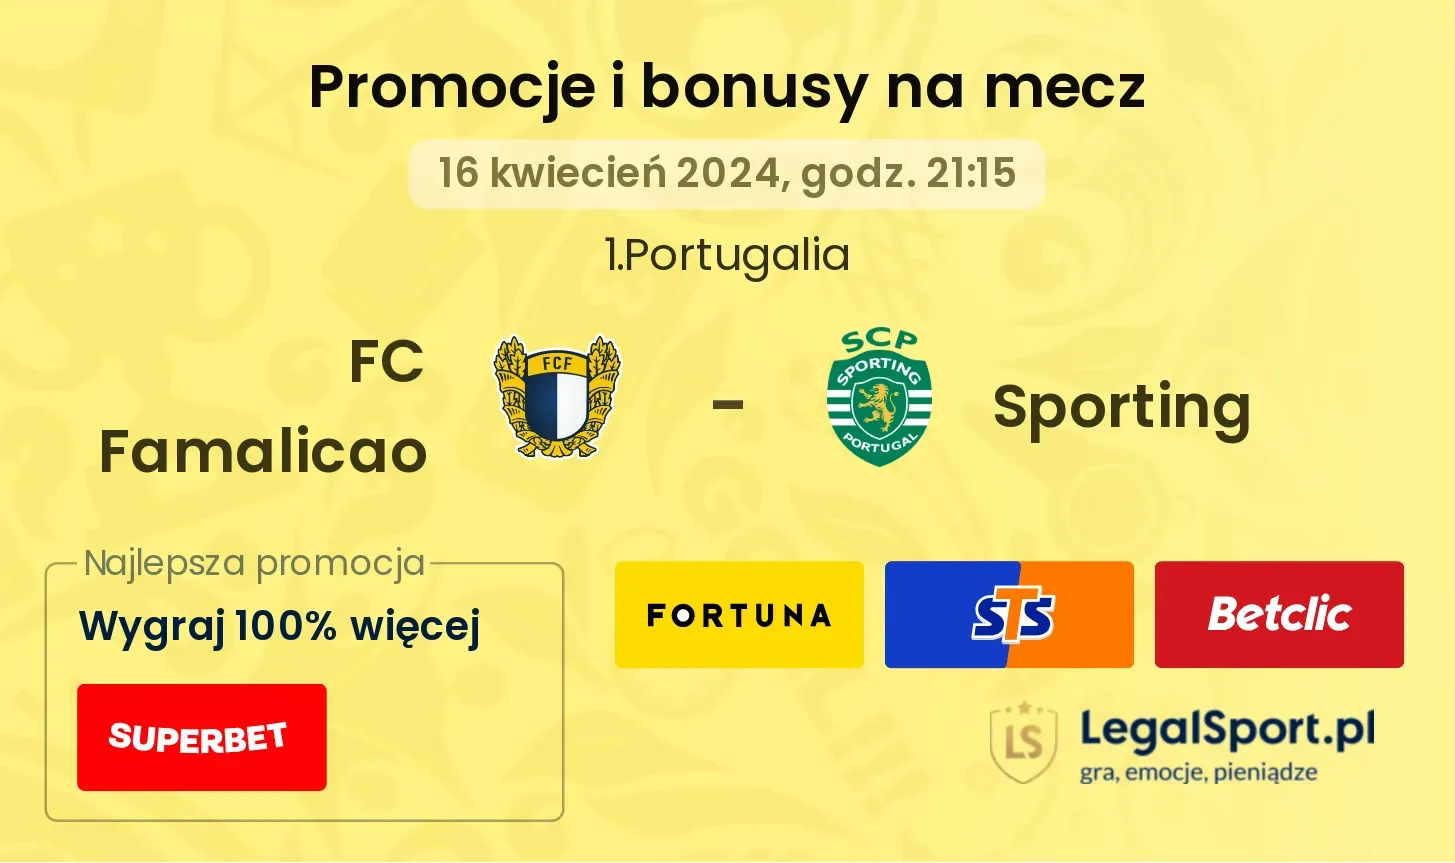 FC Famalicao - Sporting promocje bonusy na mecz